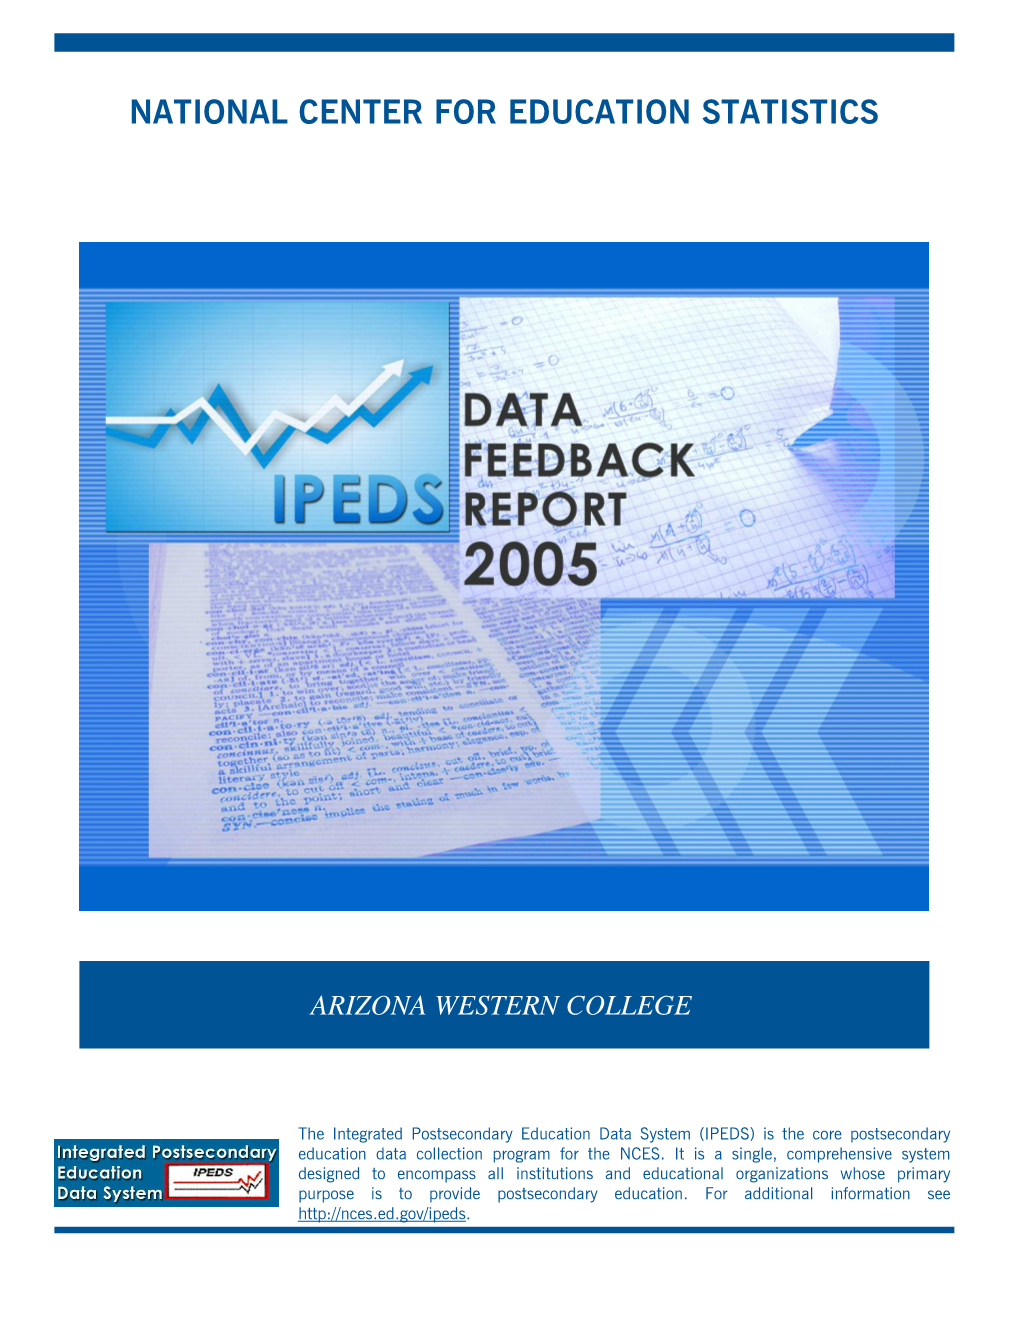 2005 IPEDS Data Feedback Report for ARIZONA WESTERN COLLEGE